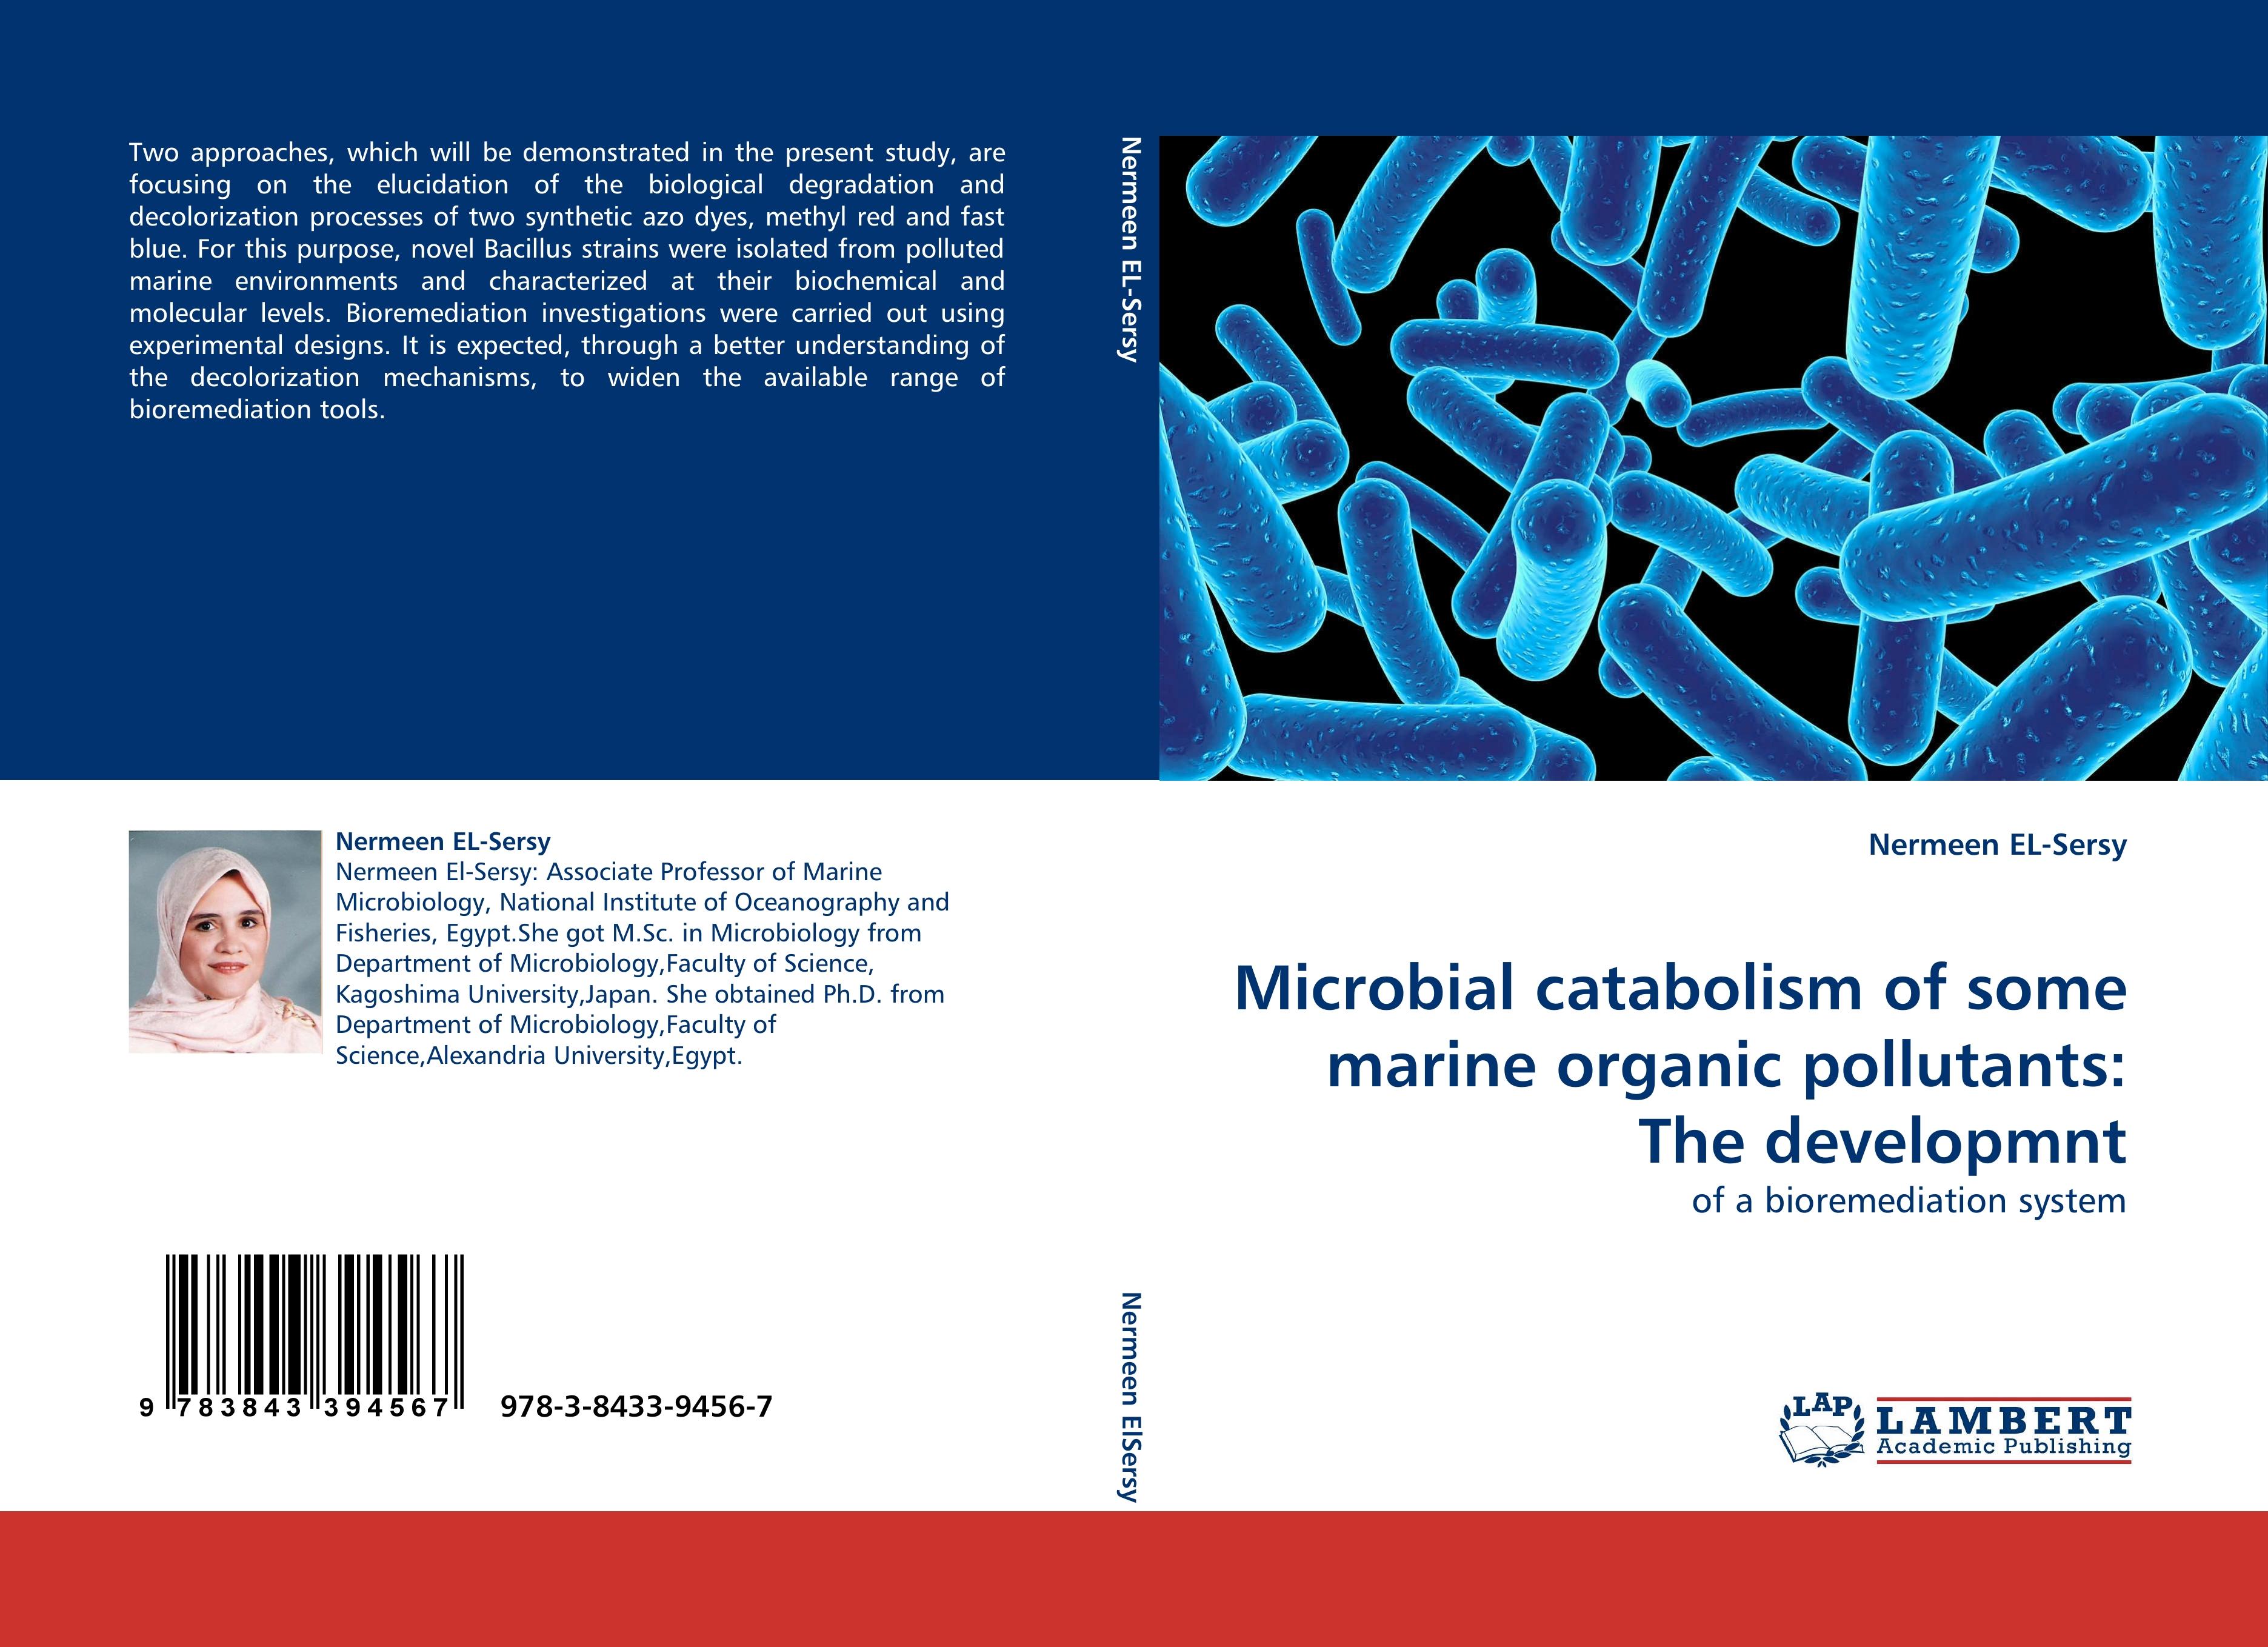 Microbial catabolism of some marine organic pollutants: The developmnt - Nermeen EL-Sersy